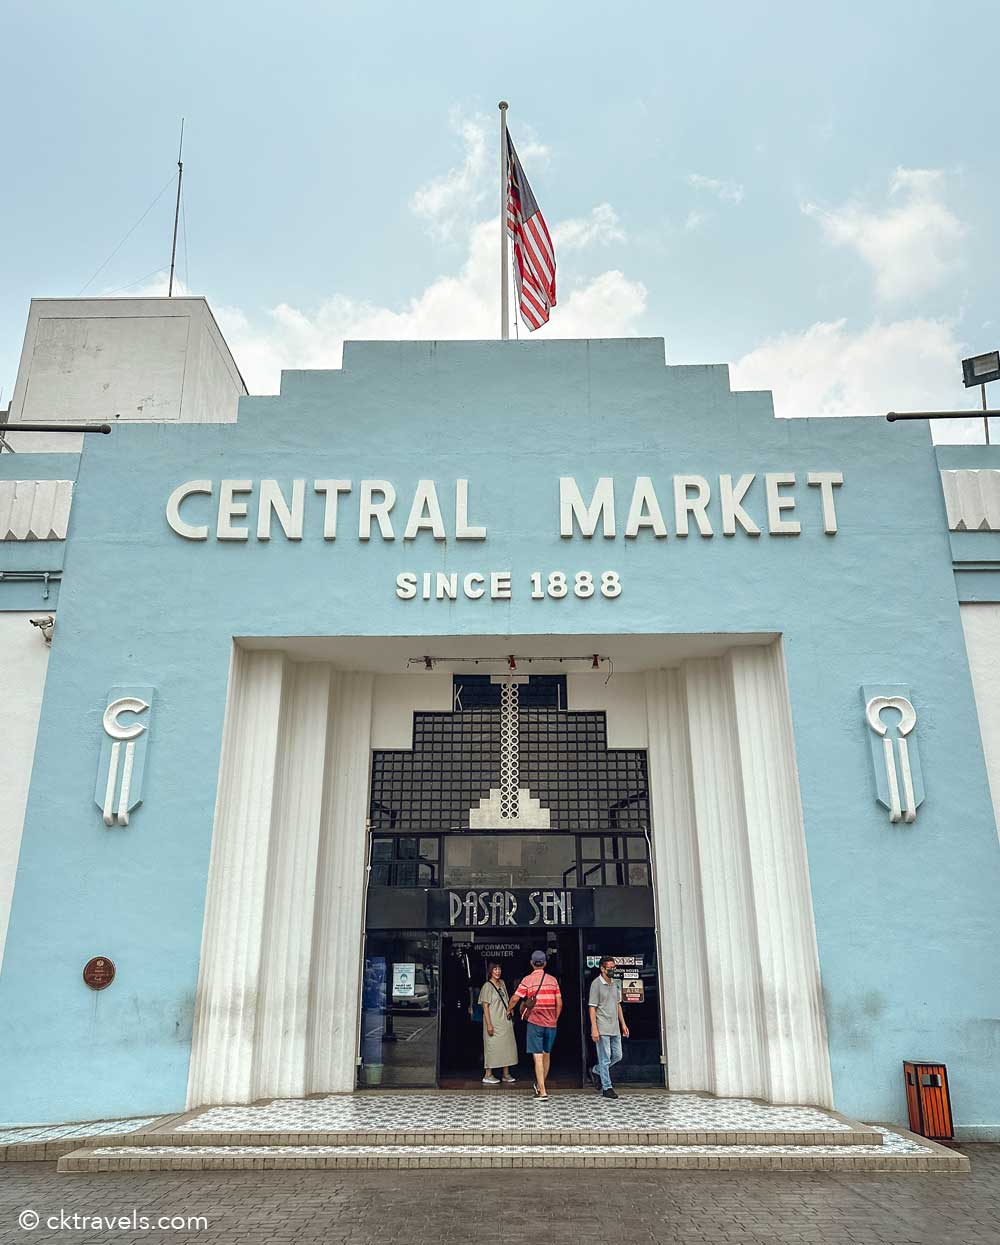 Central Market / Pasar Seni -Chinatown, Kuala Lumpur